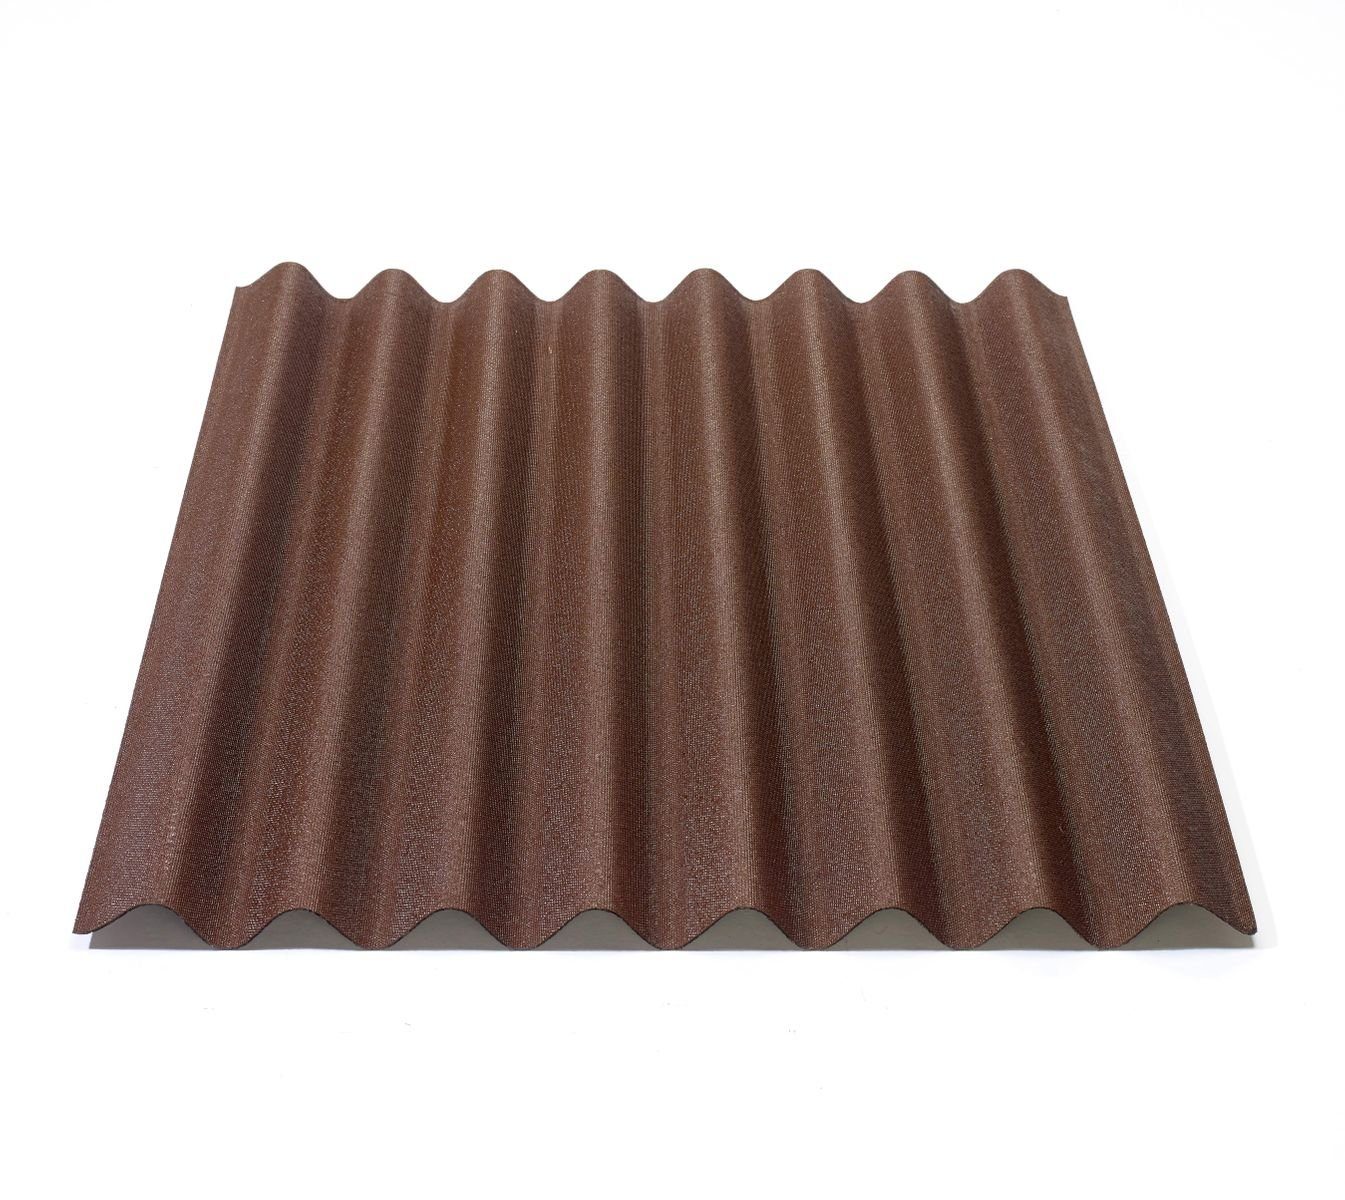 Onduline Dachpappe Onduline Easyline Dachplatte Wandplatte Bitumenwellplatten Wellplatte 1x0,76m - braun, wellig, 0.76 m² pro Paket, (1-St)